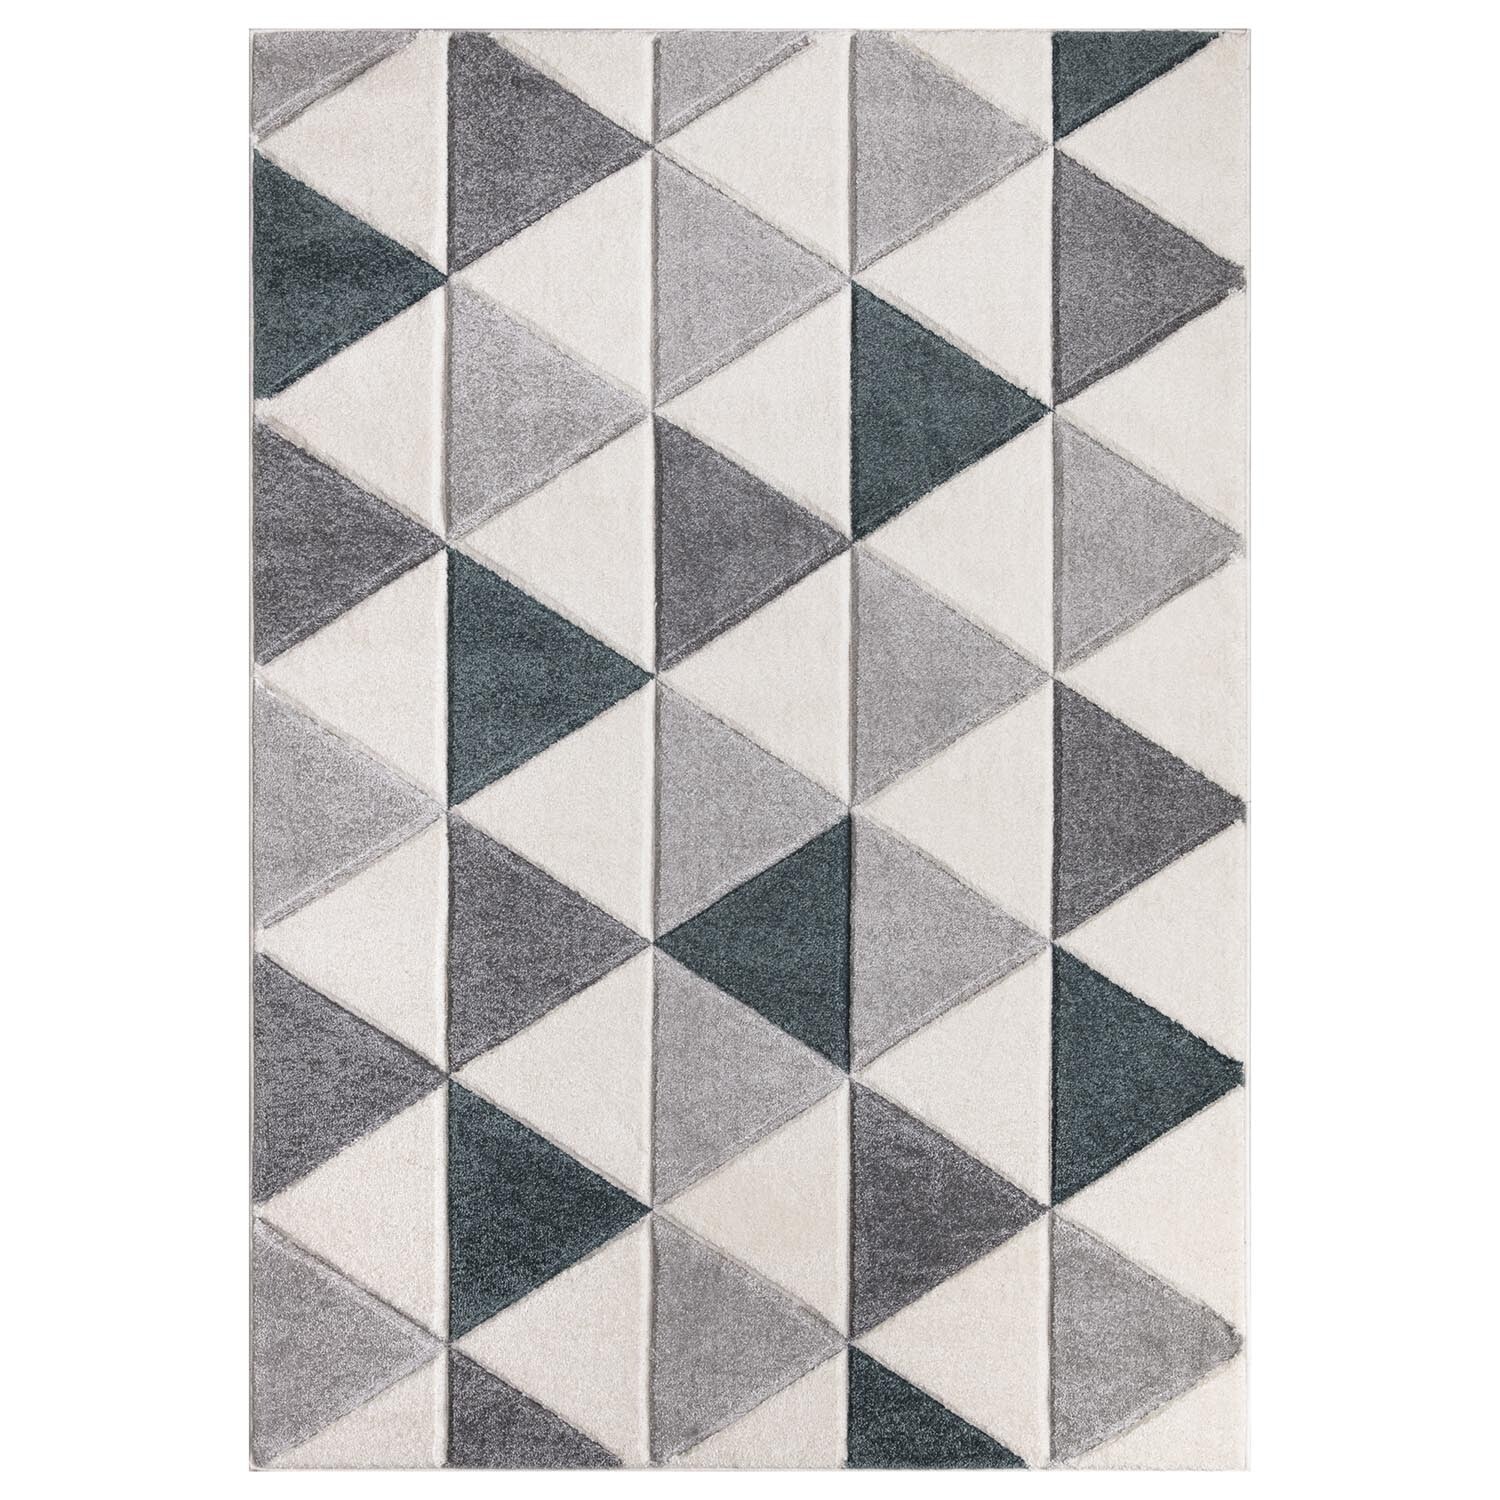 Teal and Grey Triangle Modern Geo Rug 230 x 160cm Image 1